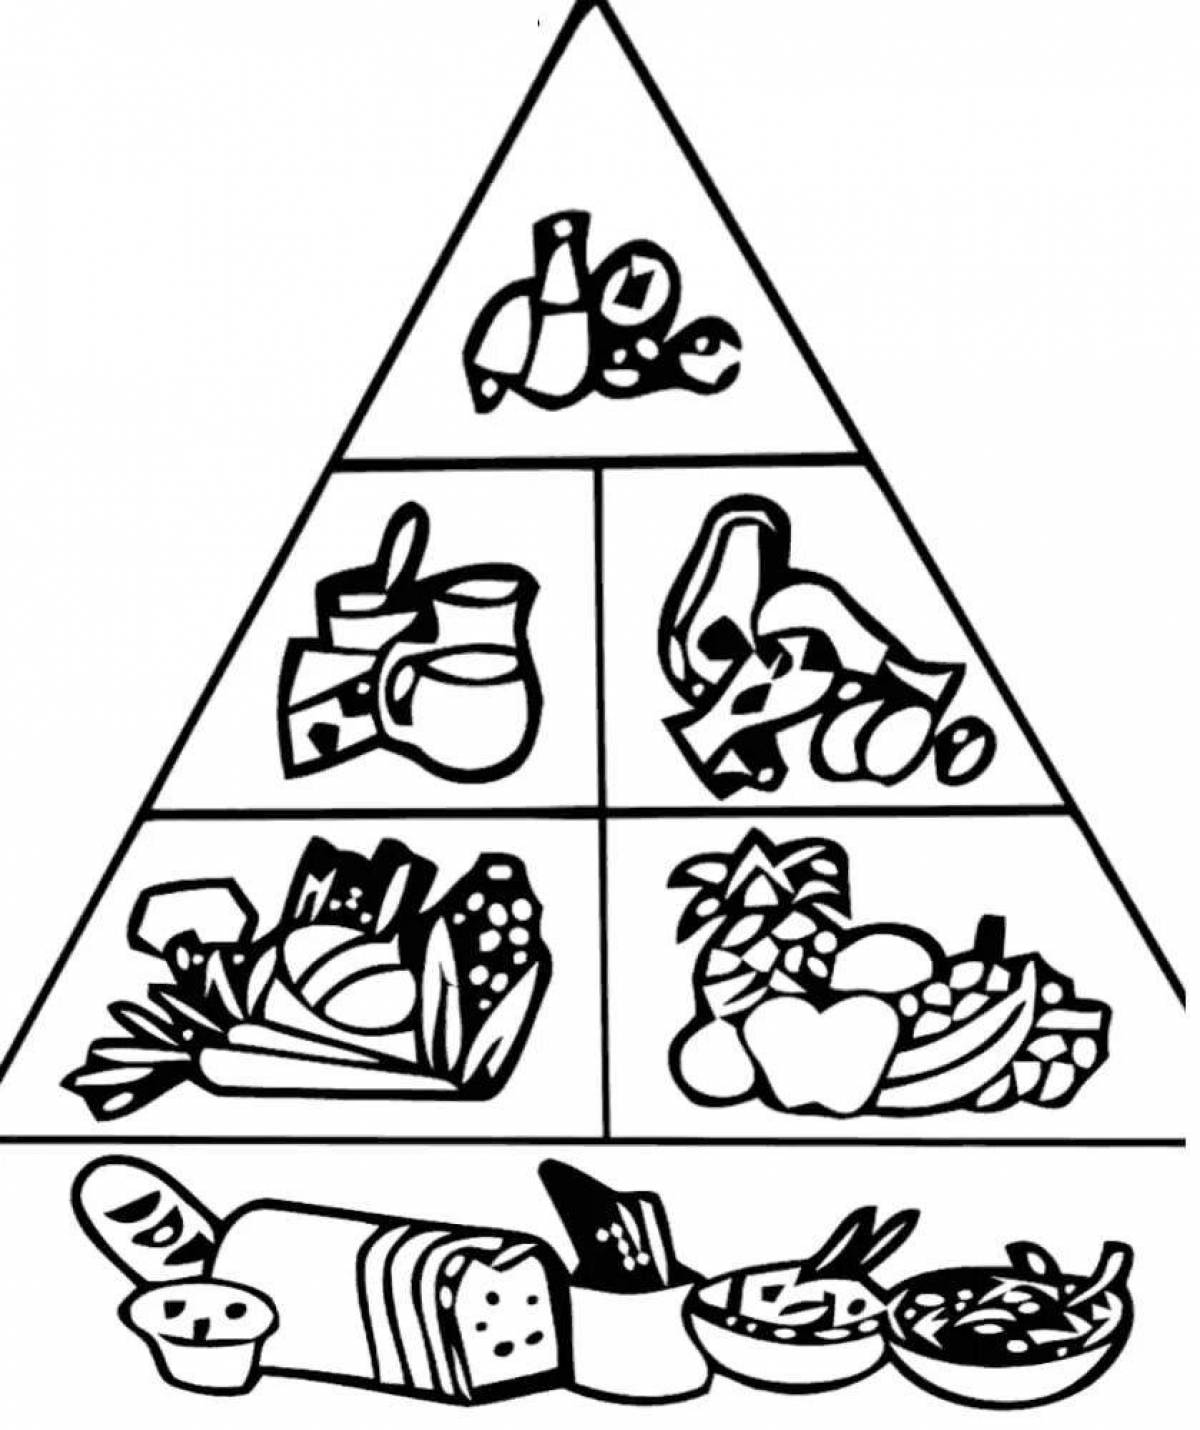 Food pyramid #13